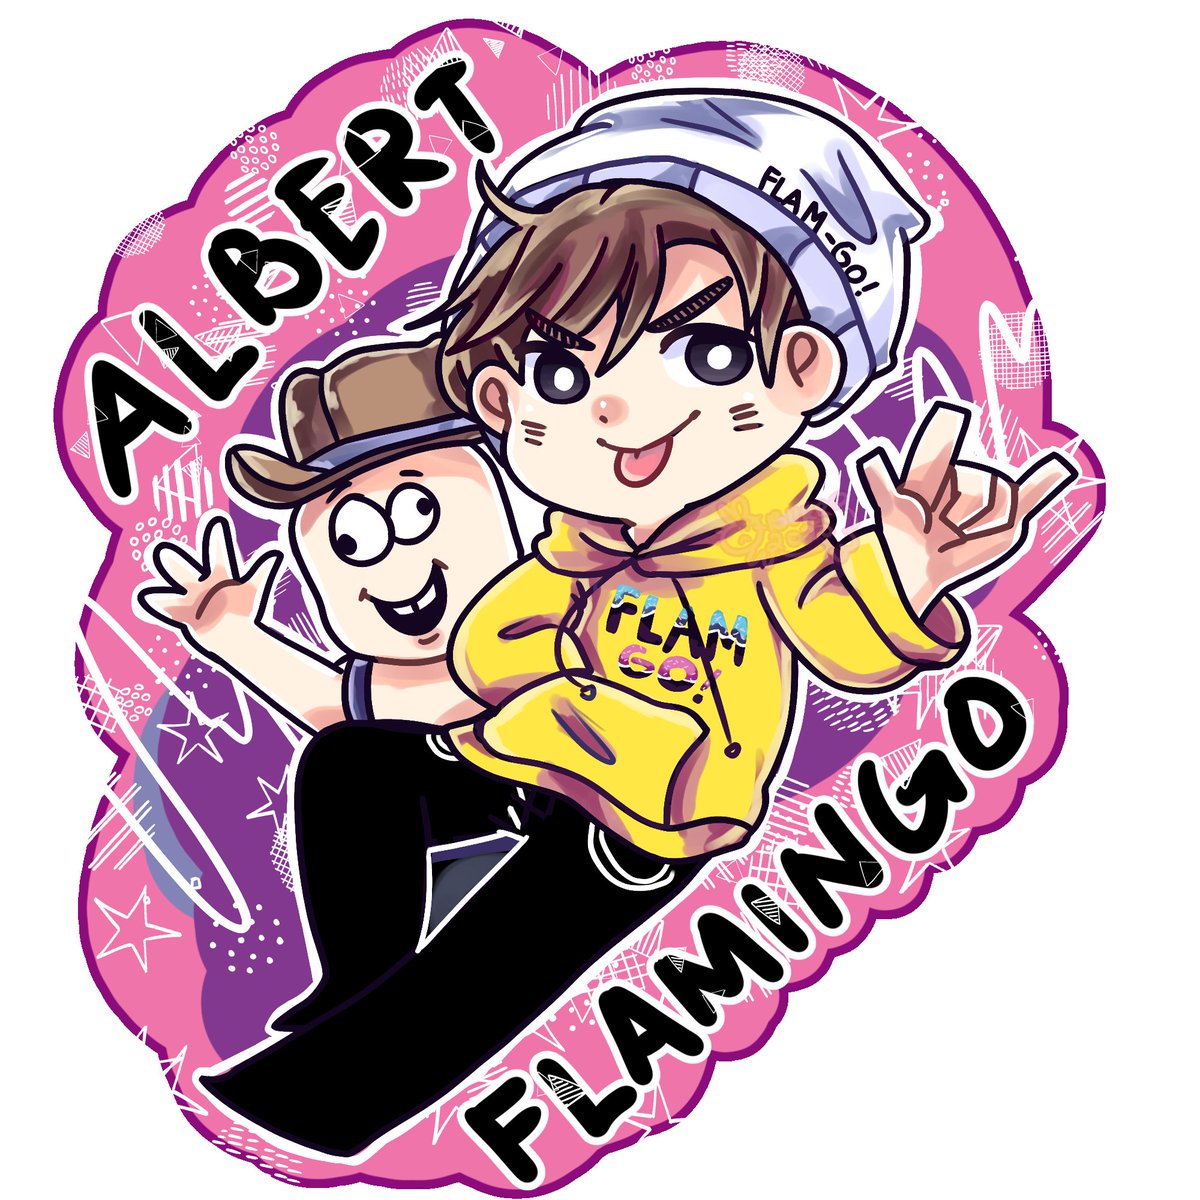 Jenniburr On Twitter I Made A Fan Art Of Albert From Flamingo